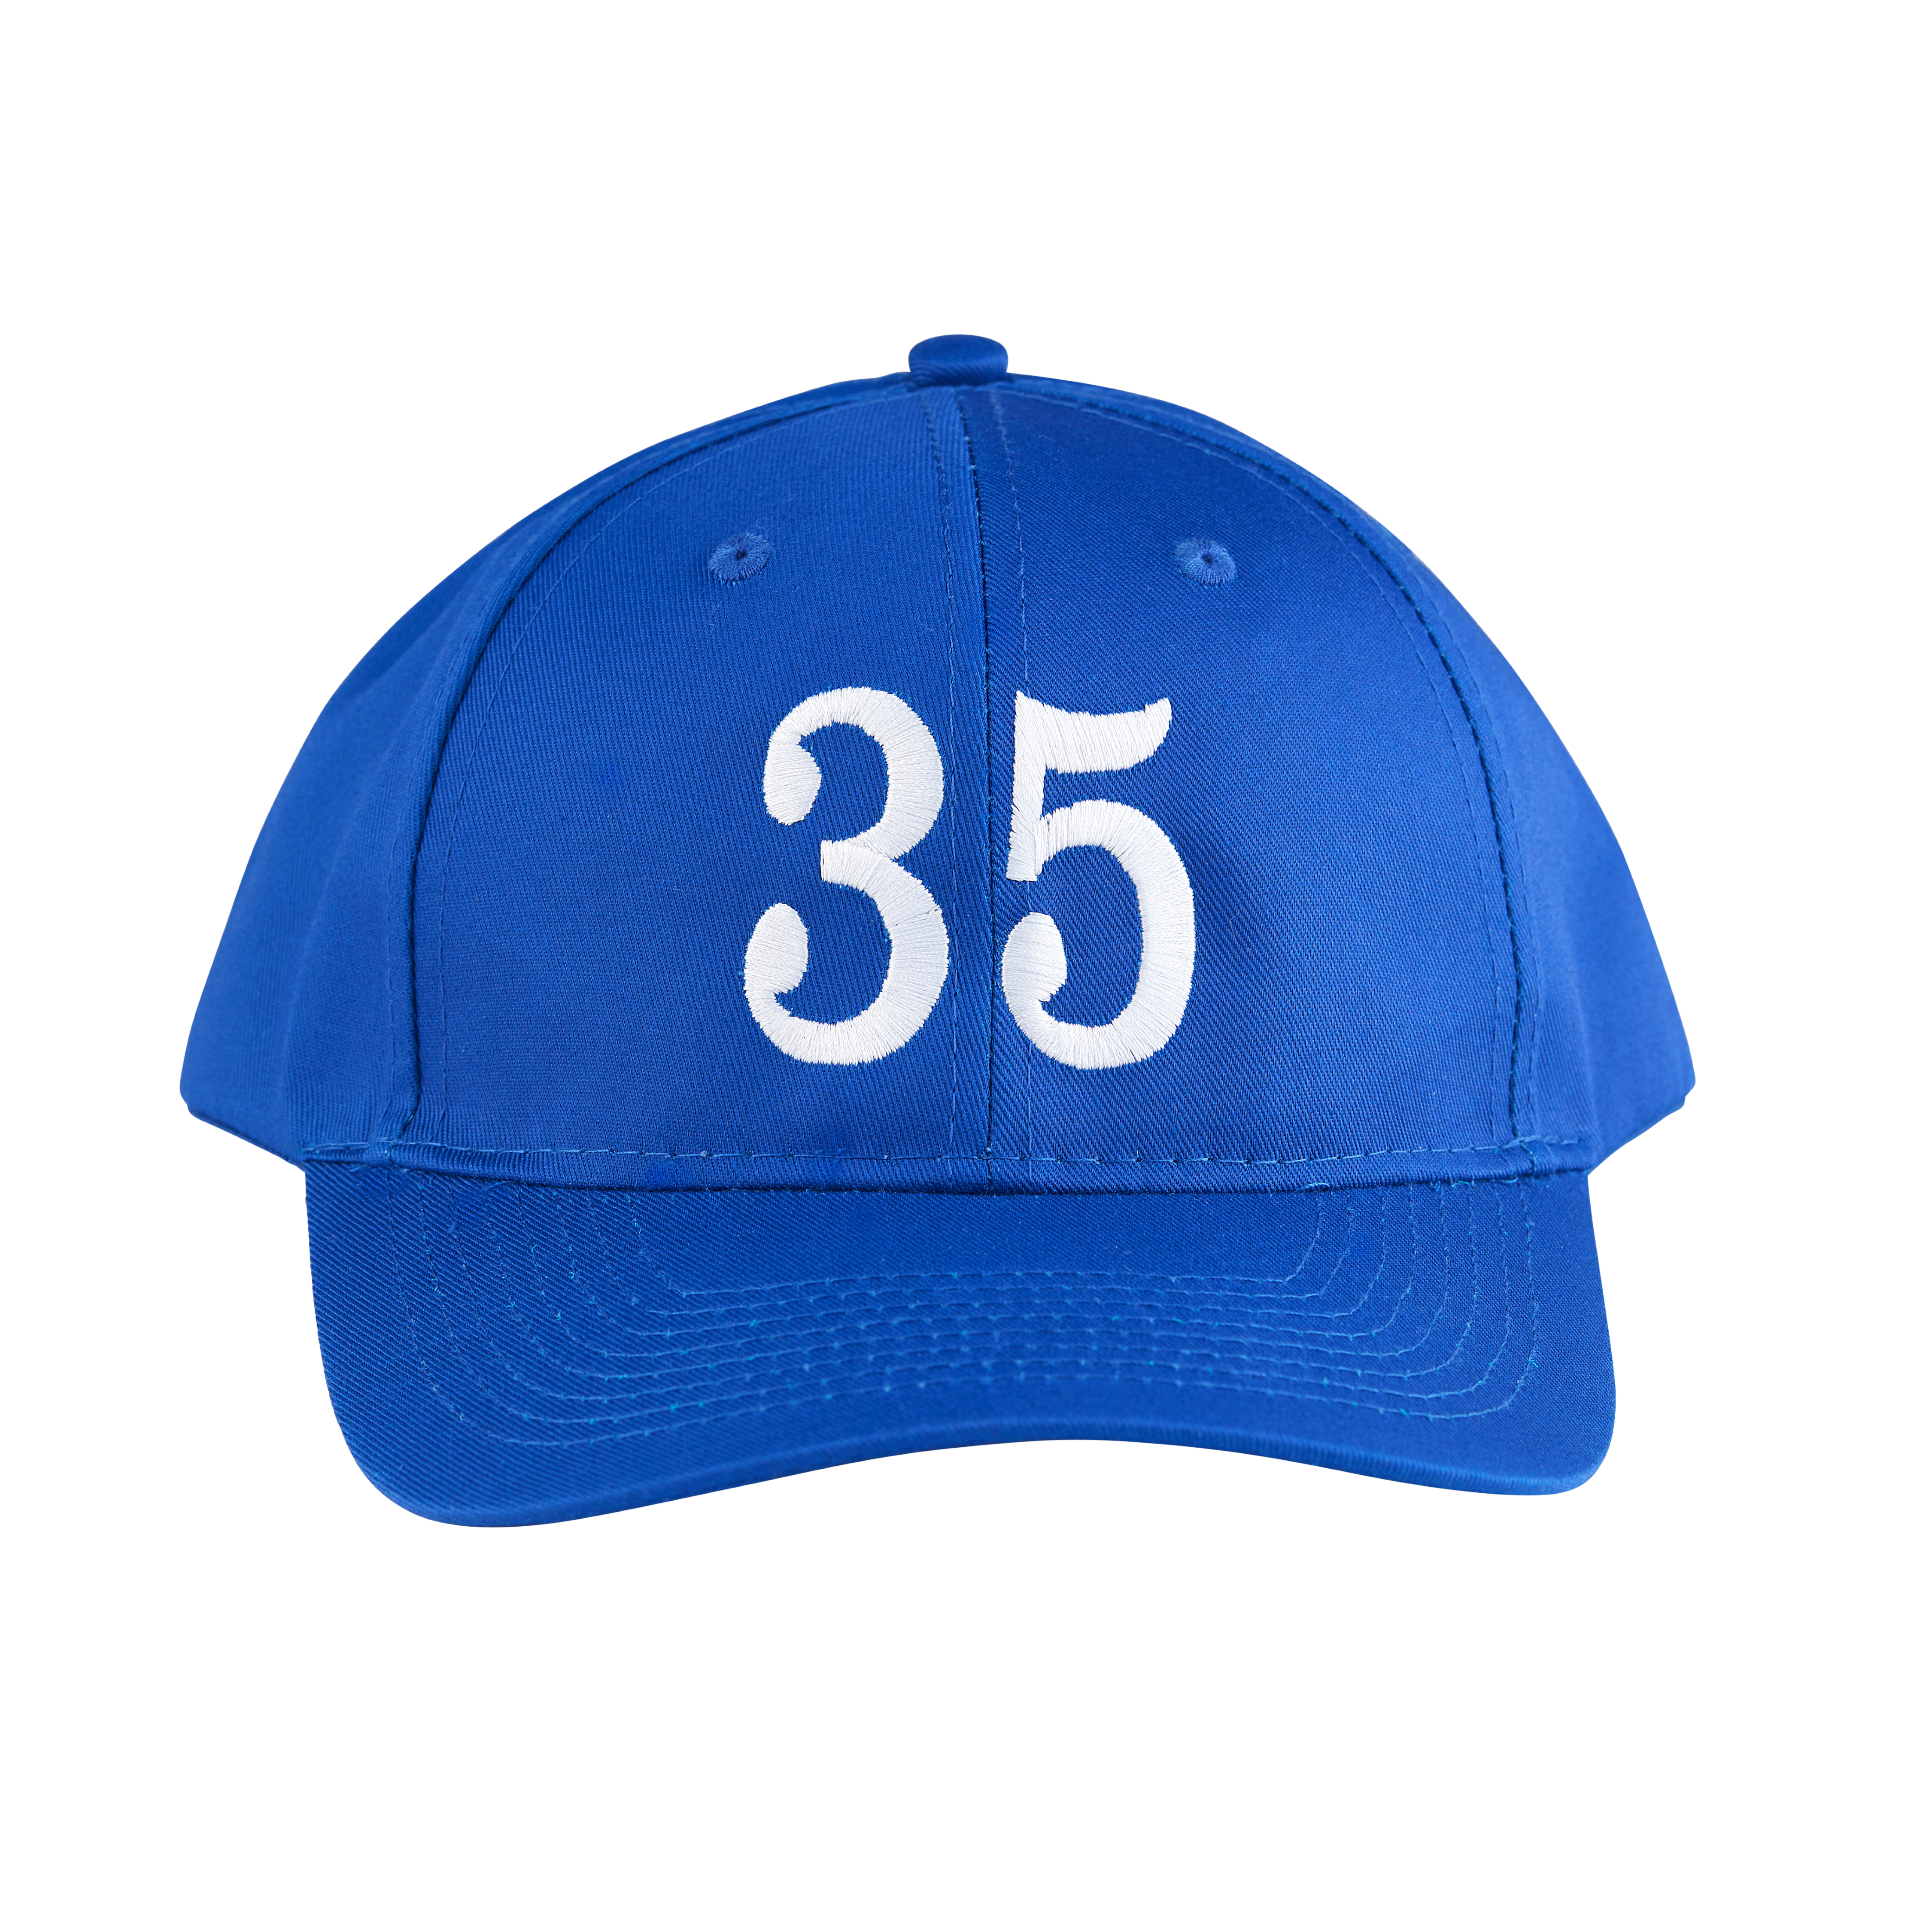 JFK 35 Baseball Hat